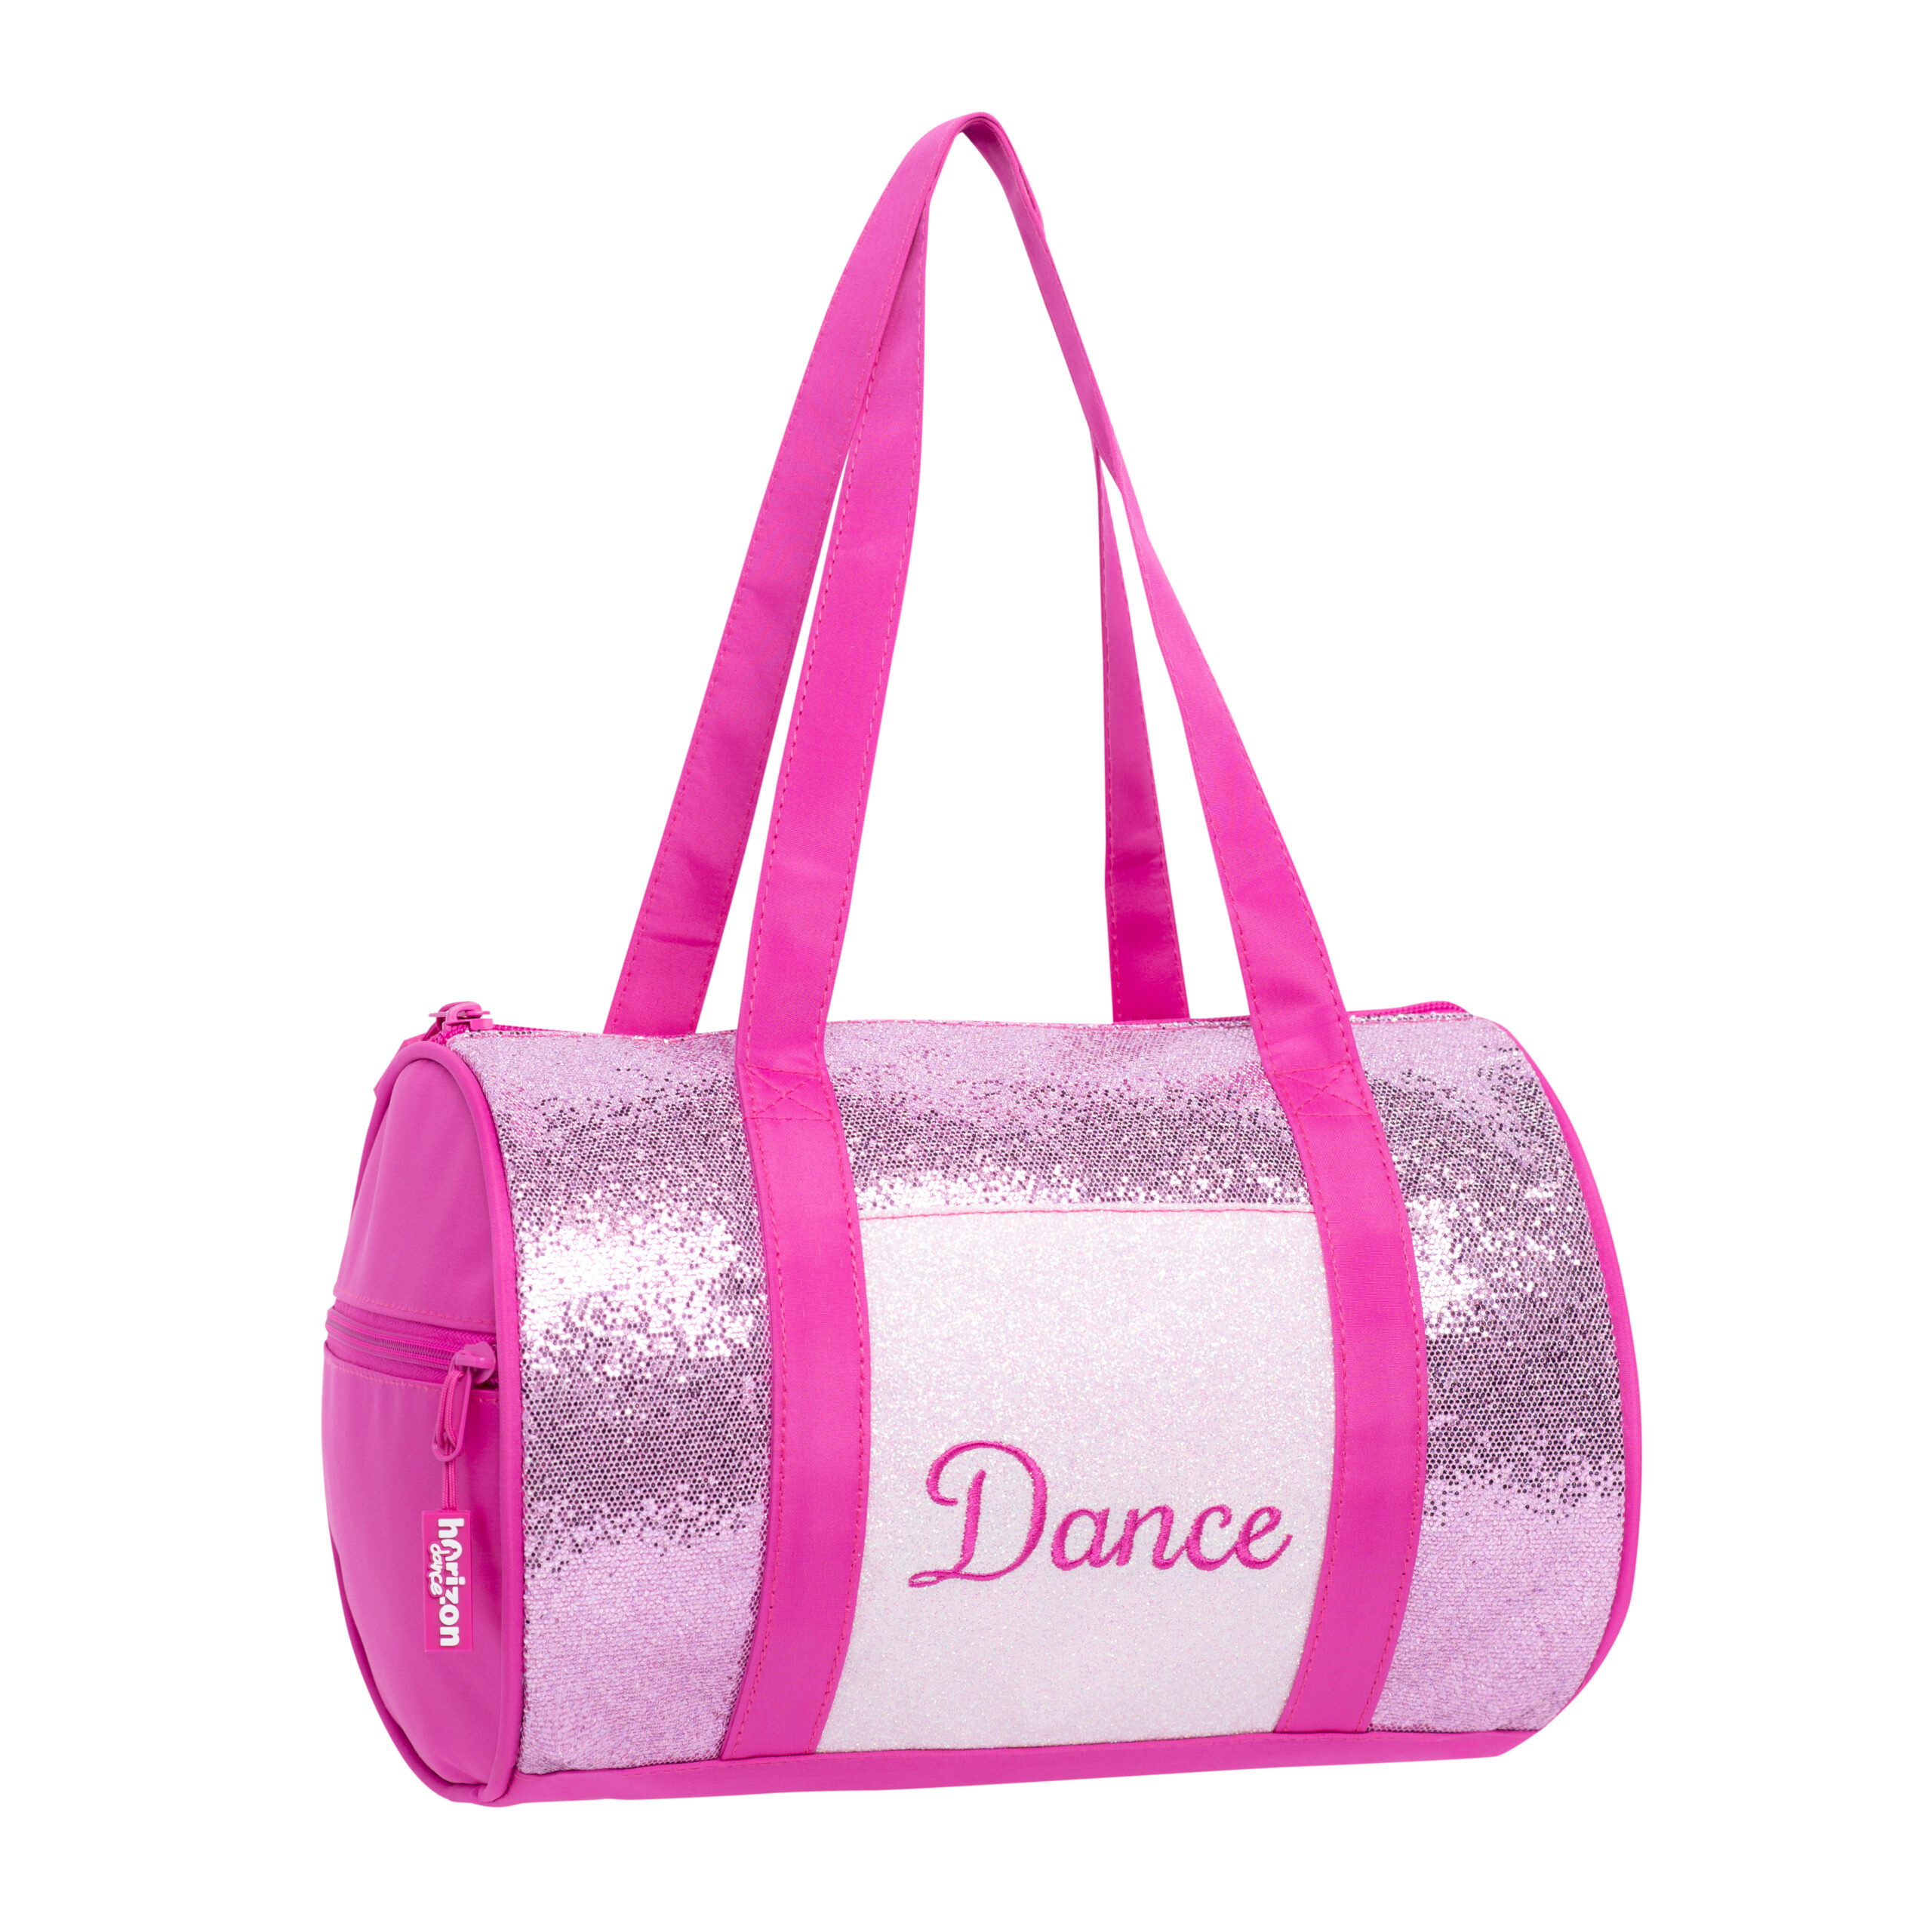 5336 - Carolyn Duffel - Pink - NEW! - Horizon Dance Bags